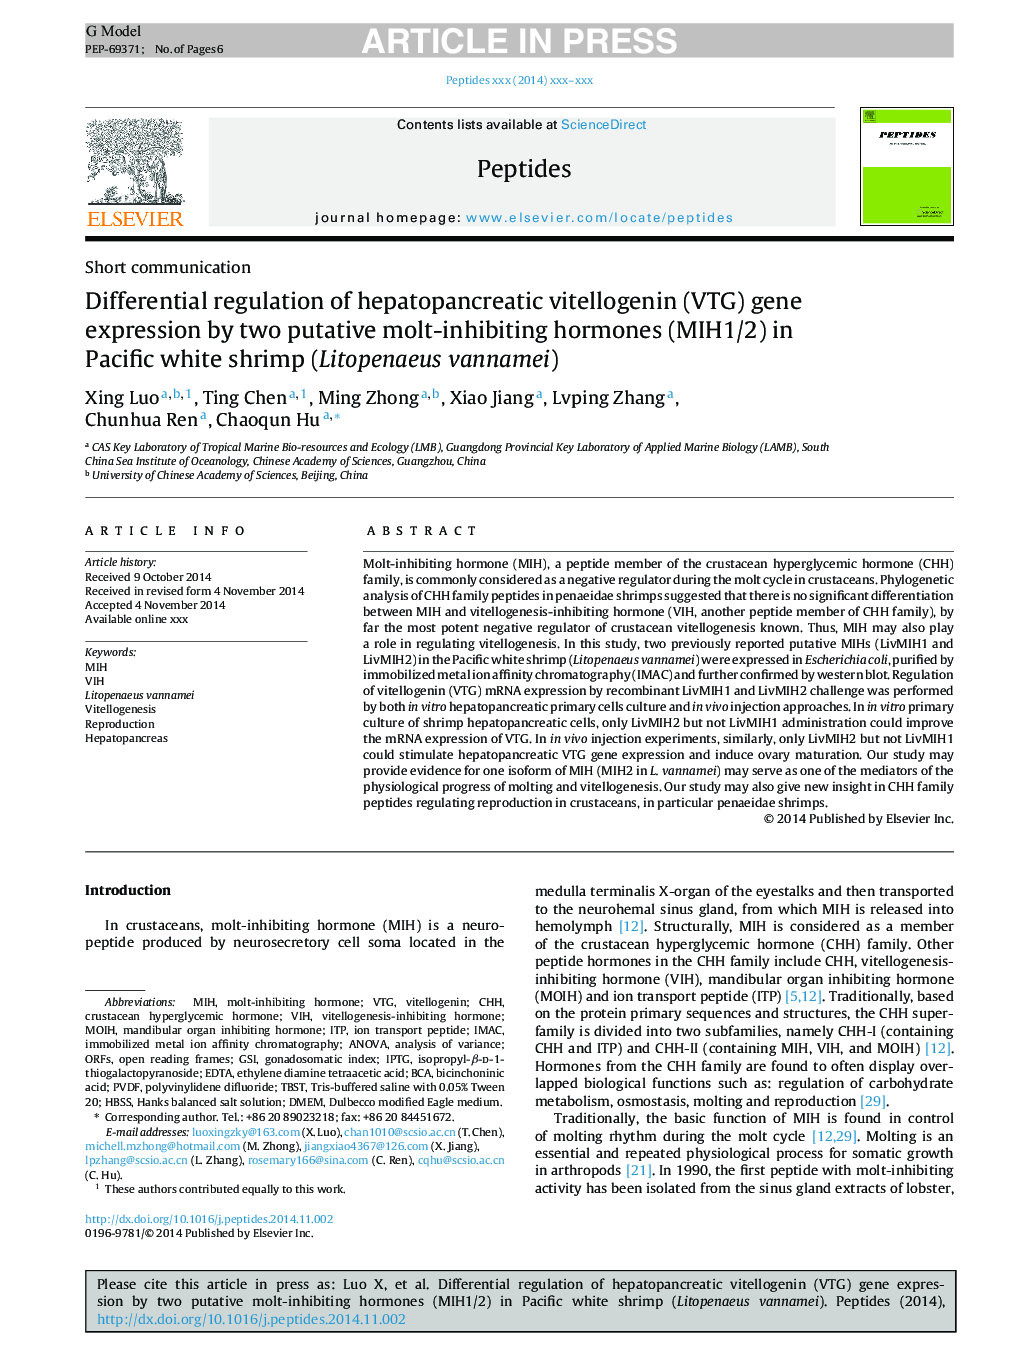 Differential regulation of hepatopancreatic vitellogenin (VTG) gene expression by two putative molt-inhibiting hormones (MIH1/2) in Pacific white shrimp (Litopenaeus vannamei)